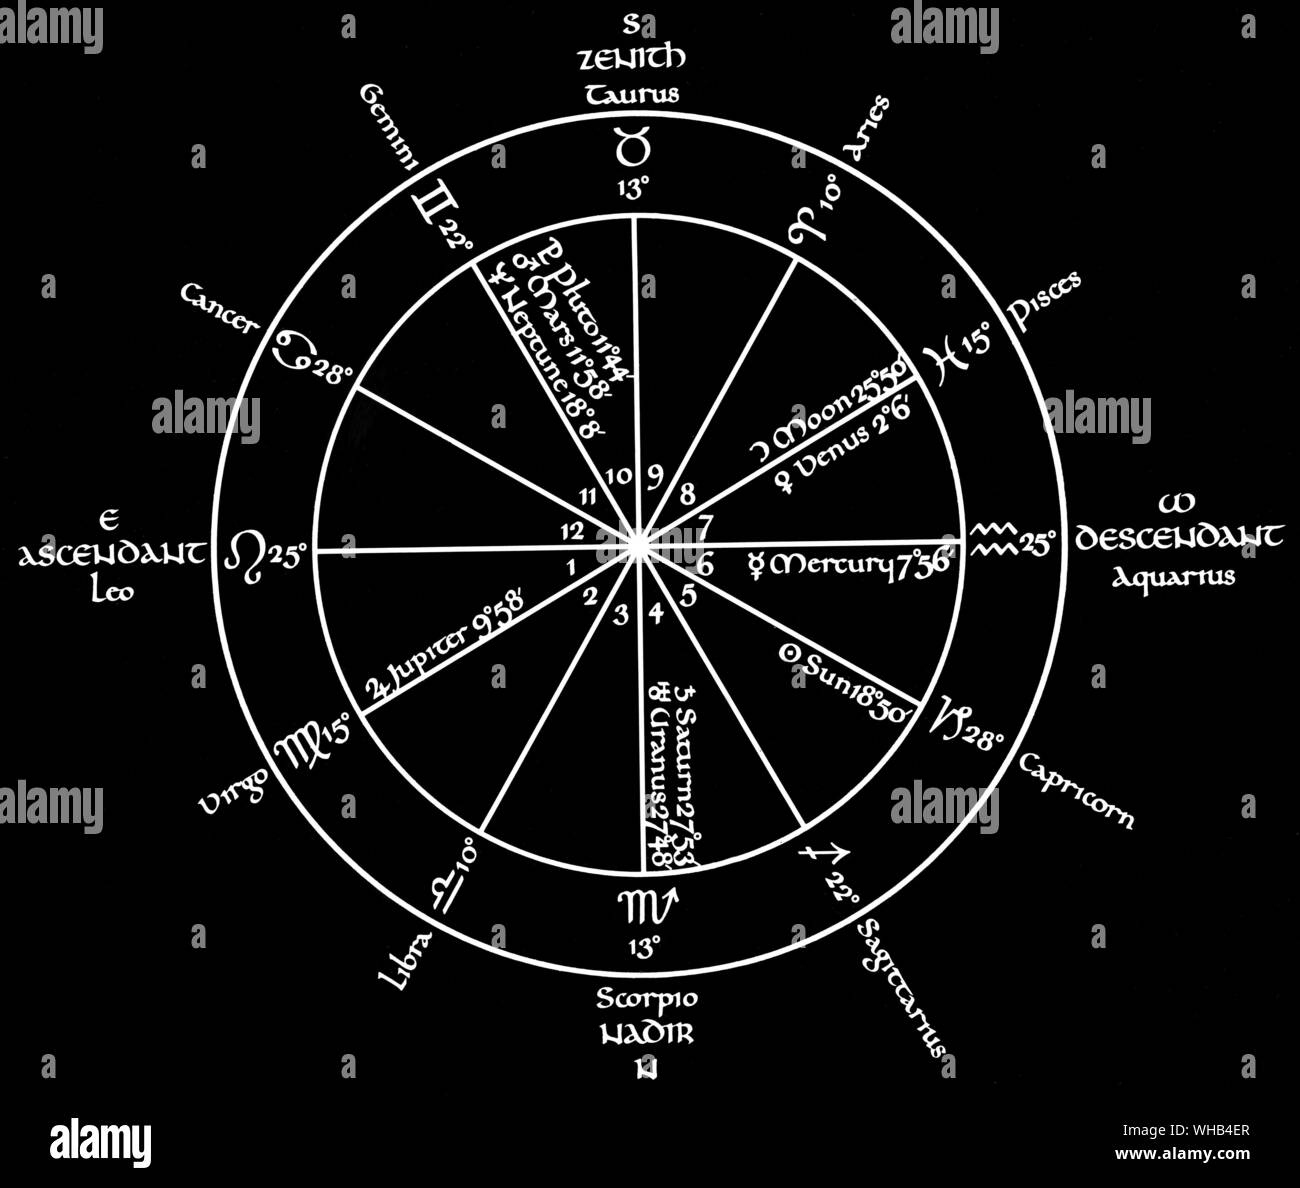 Dennis Wheatley's horoscope - birth date 8 January 1897 @ 9.30 pm. Stock Photo